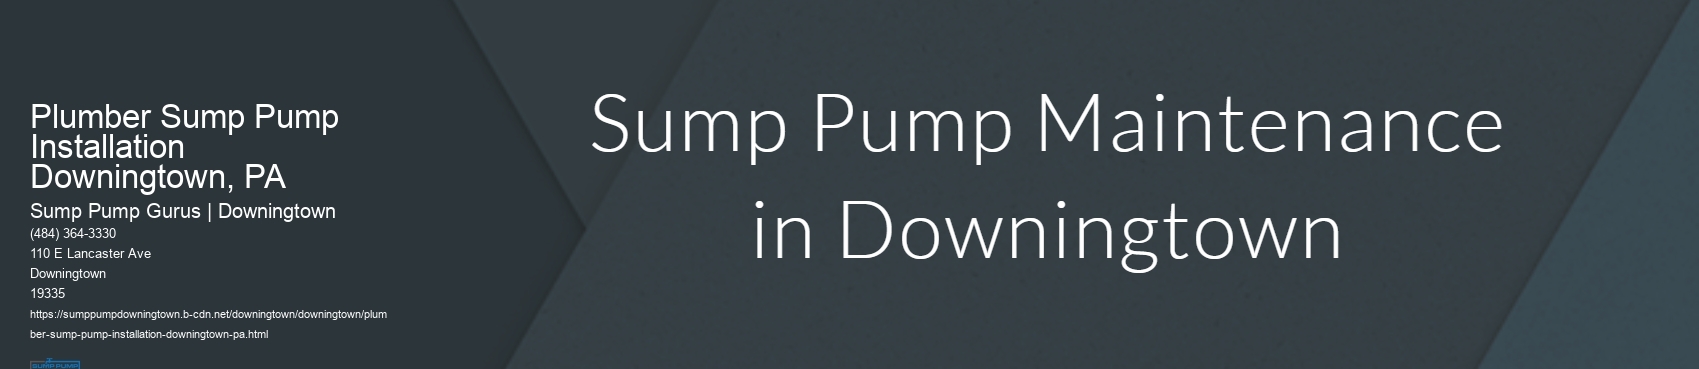 Plumber Sump Pump Installation Downingtown, PA